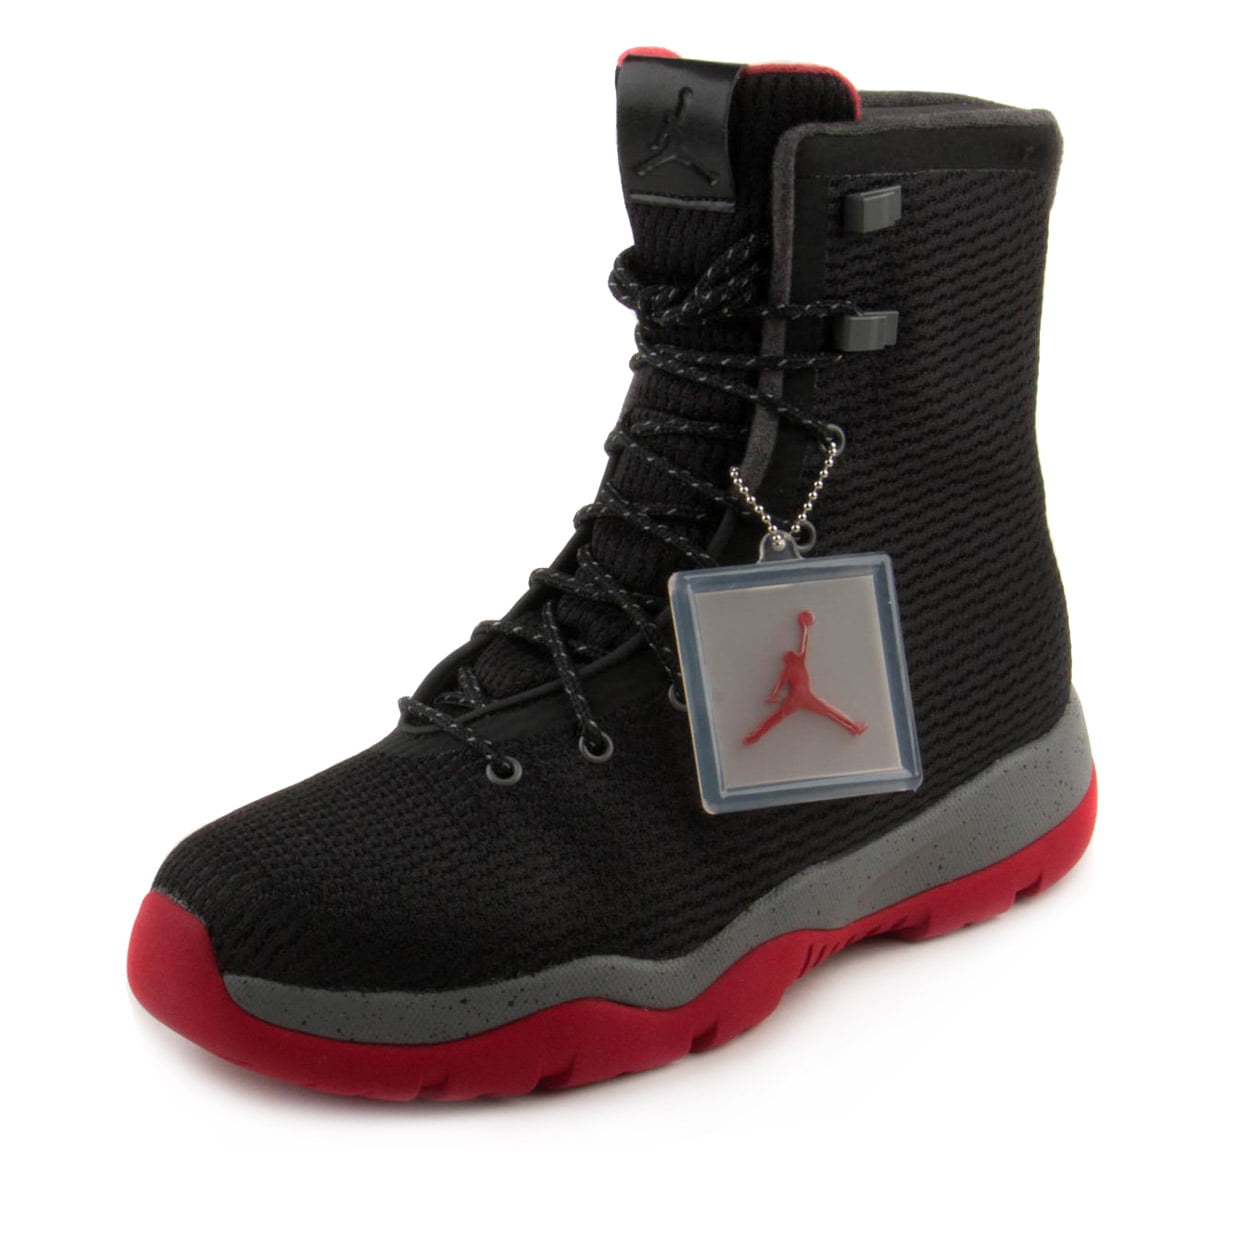 Nike Jordan Future Boot Black/Red-Grey 854554-001 - Walmart.com